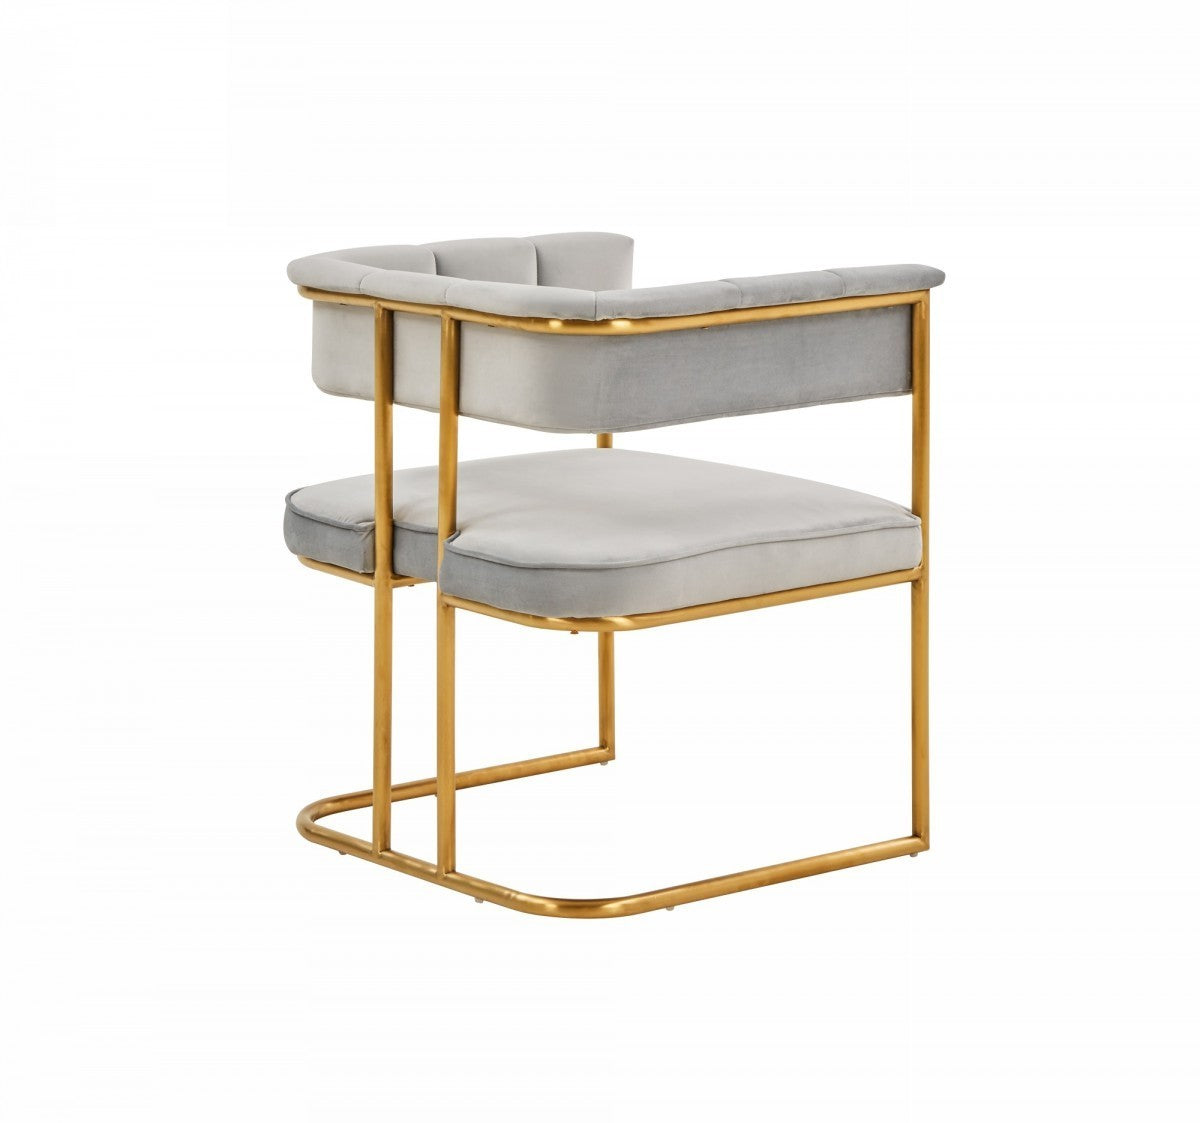 Modrest Bavaria Modern Light Grey Fabric And Gold Dining Chair